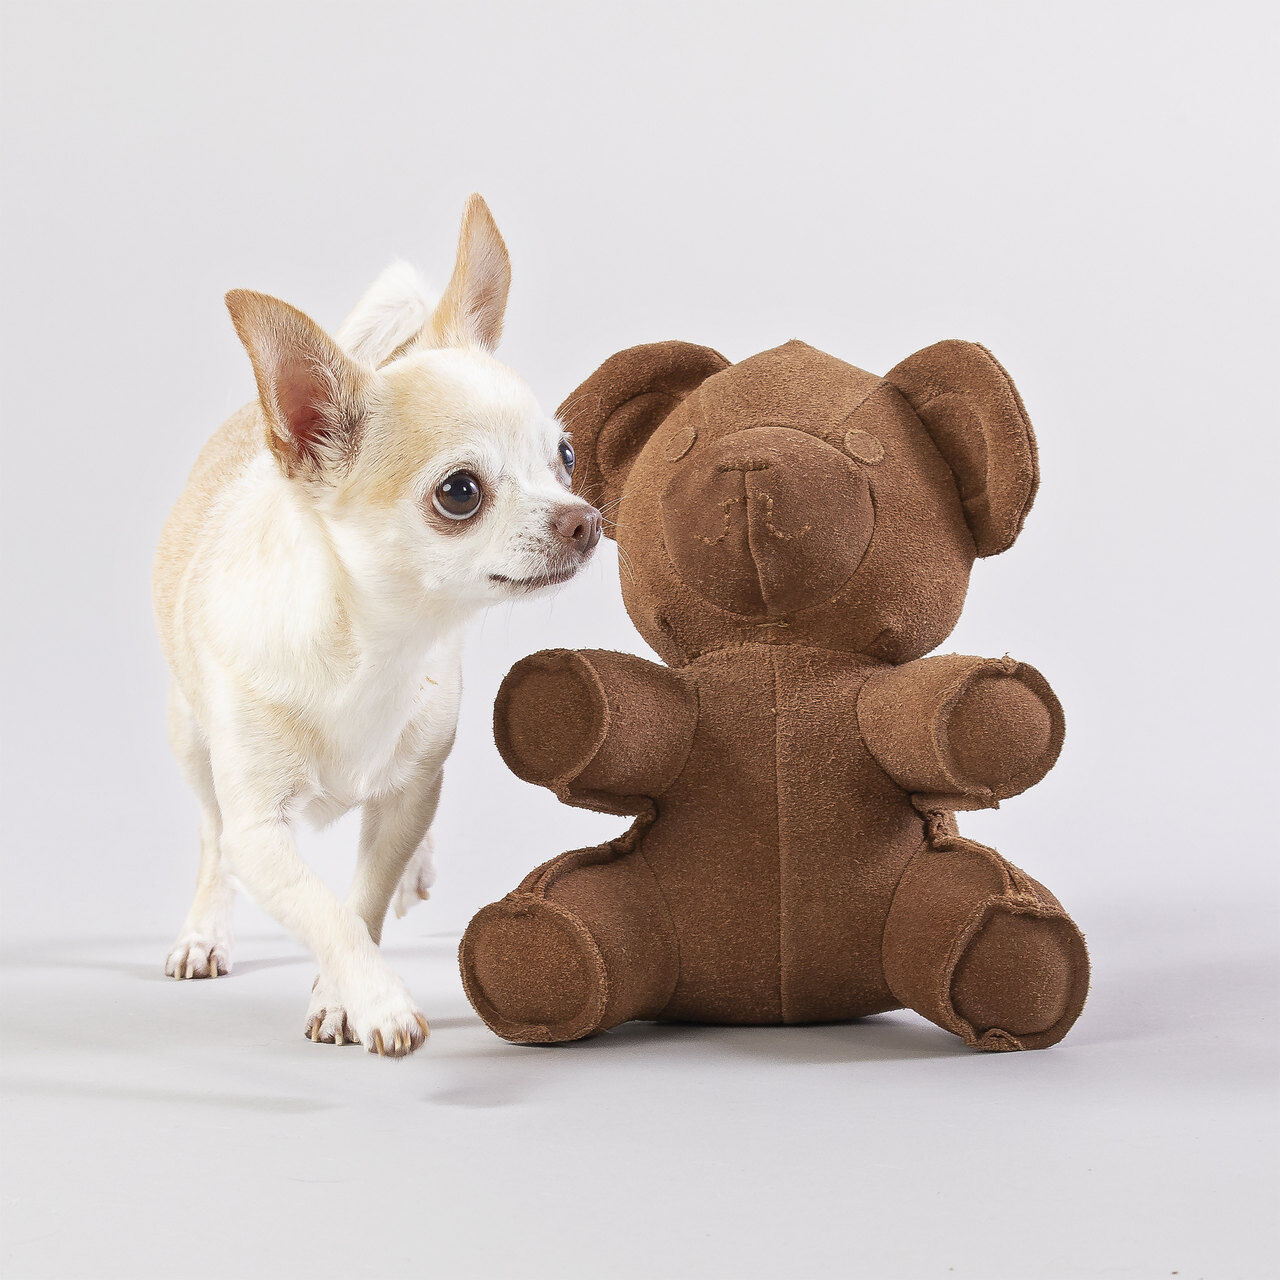 PAIKKA-Teddy-toy-Teddybaer-Hundespielzeug3-60-46382